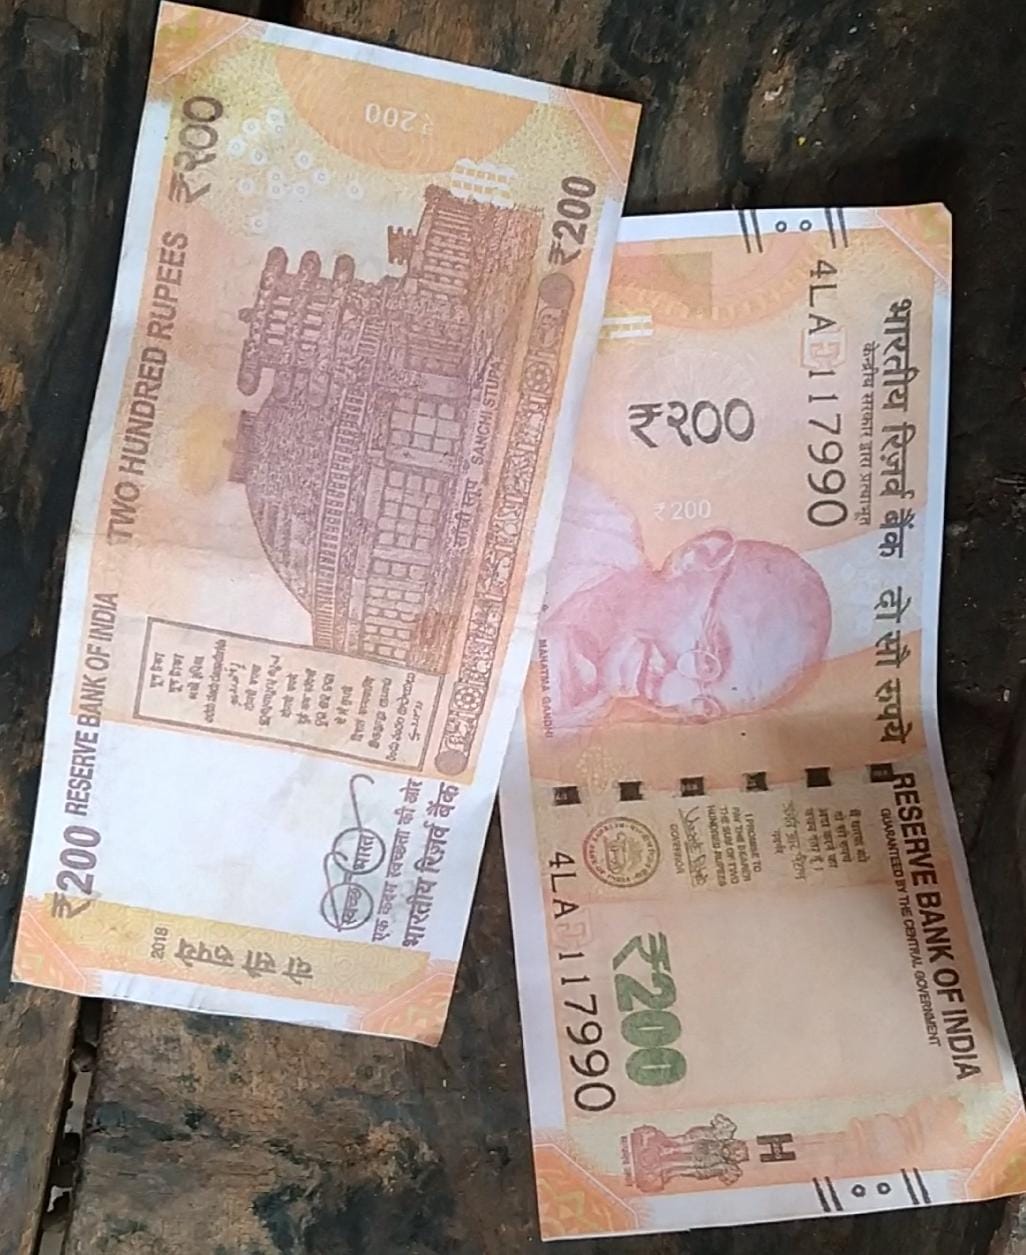 अज्ञात व्यक्ति द्वारा दुकानदार को दिये गये नकली नोट, नकली नोट देख दुकानदार हुए परेशान | New India Times